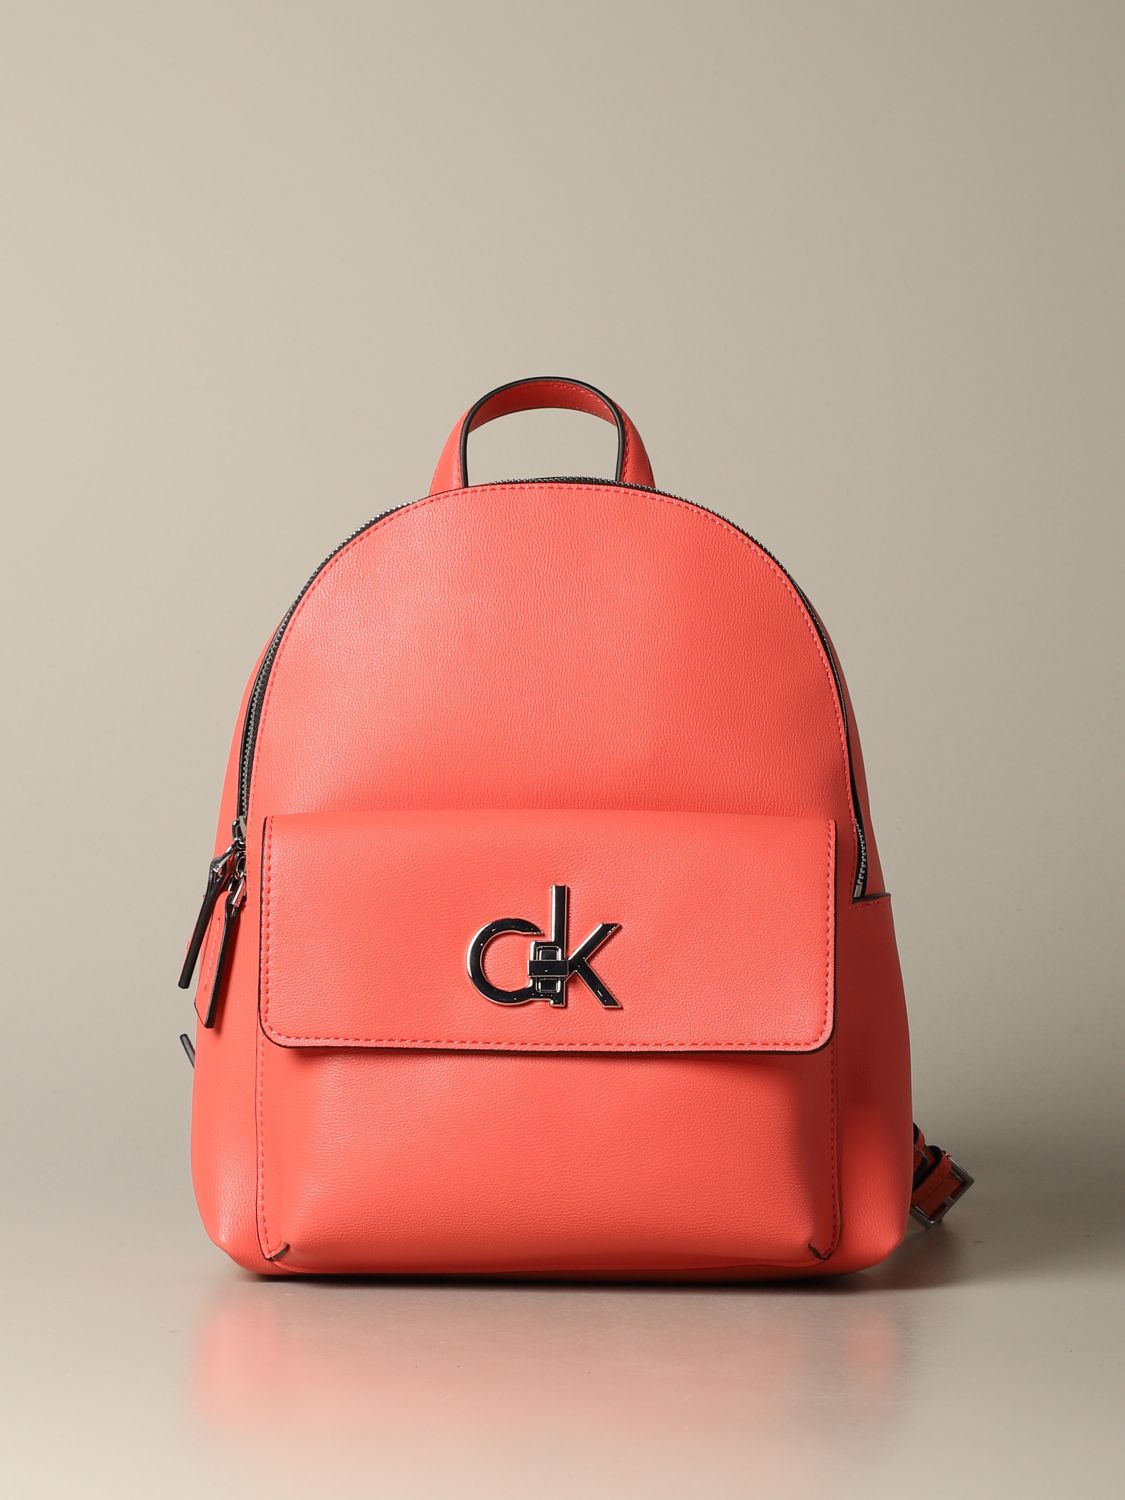 ck backpack women's